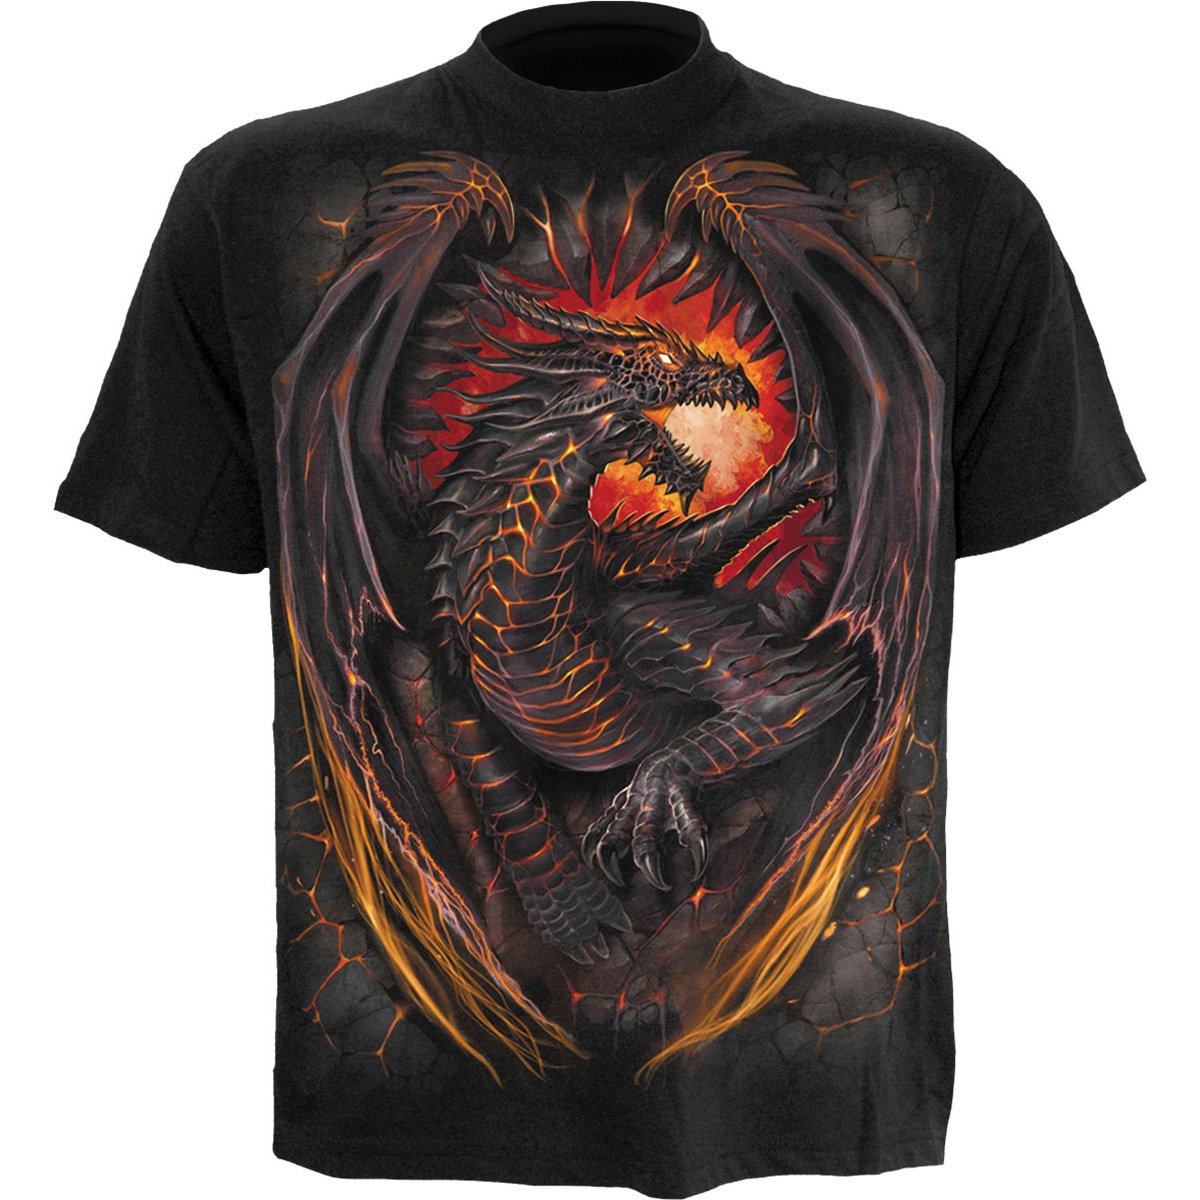 DRAGON FURNACE - T-Shirt Black - Spiral USA